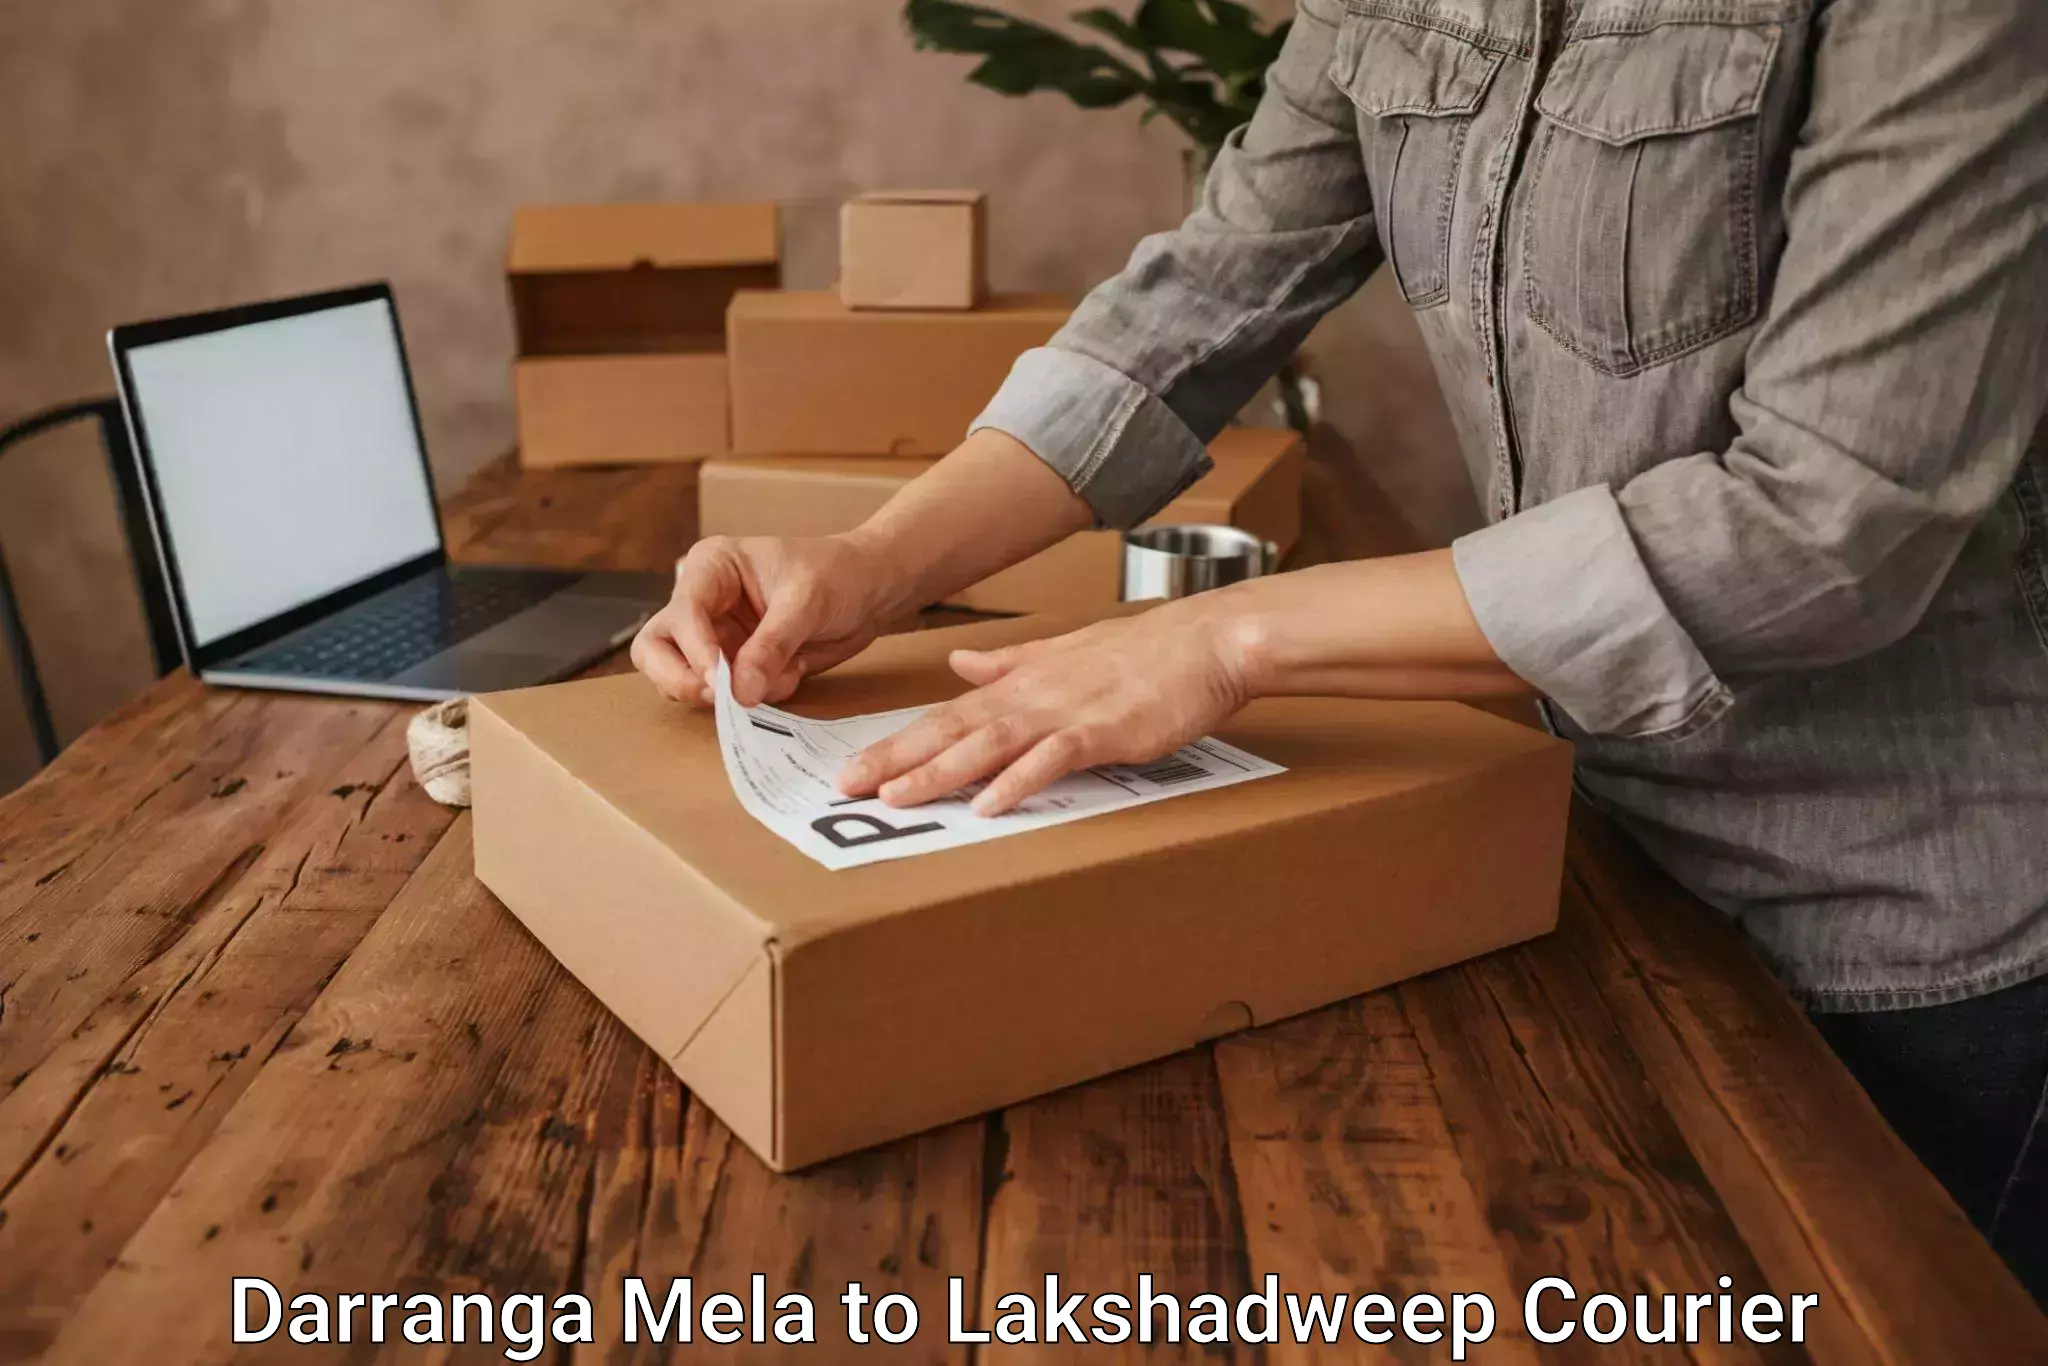 Advanced shipping network Darranga Mela to Lakshadweep